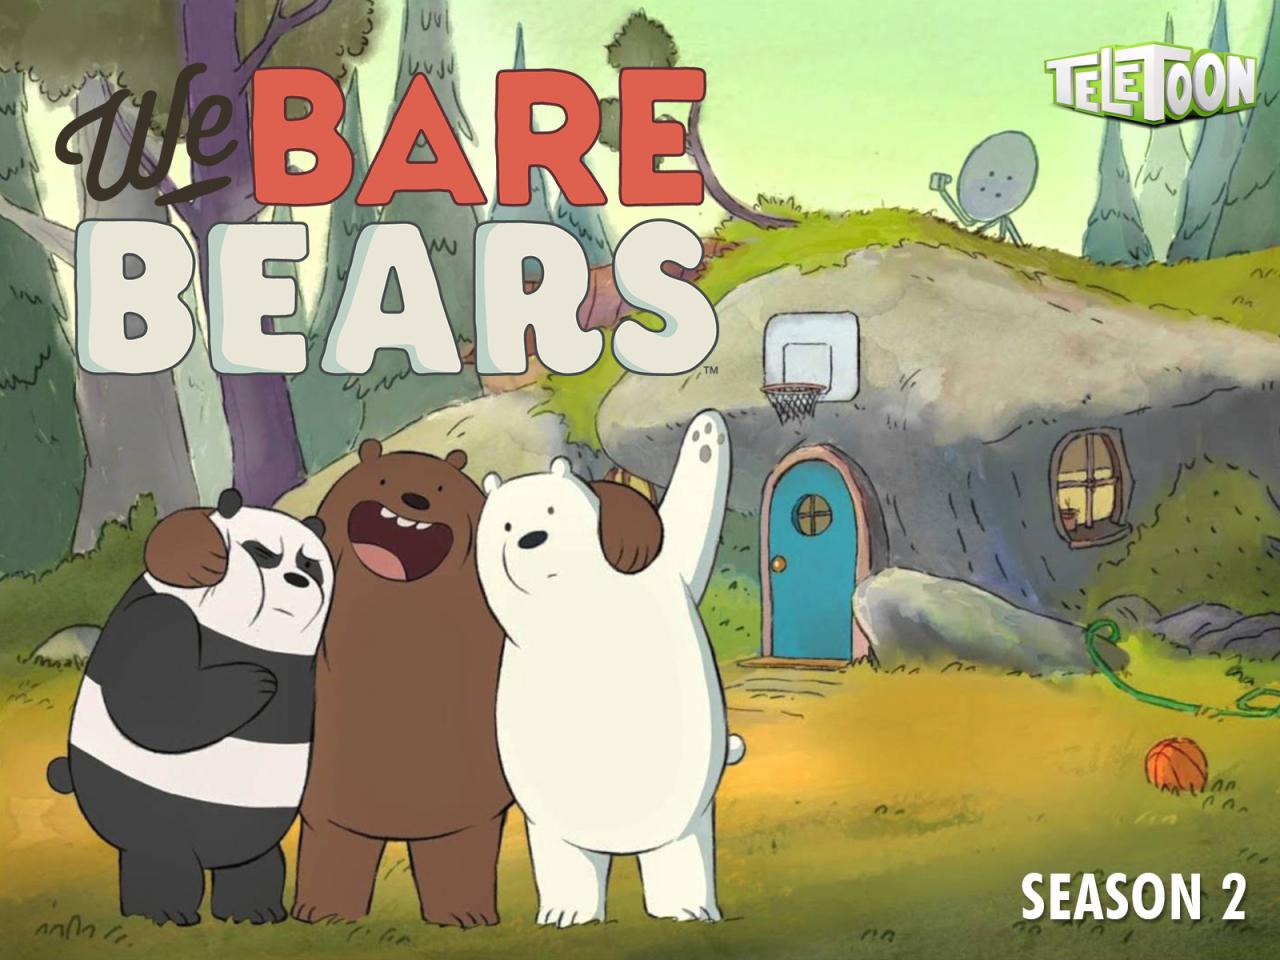 The bear season 4